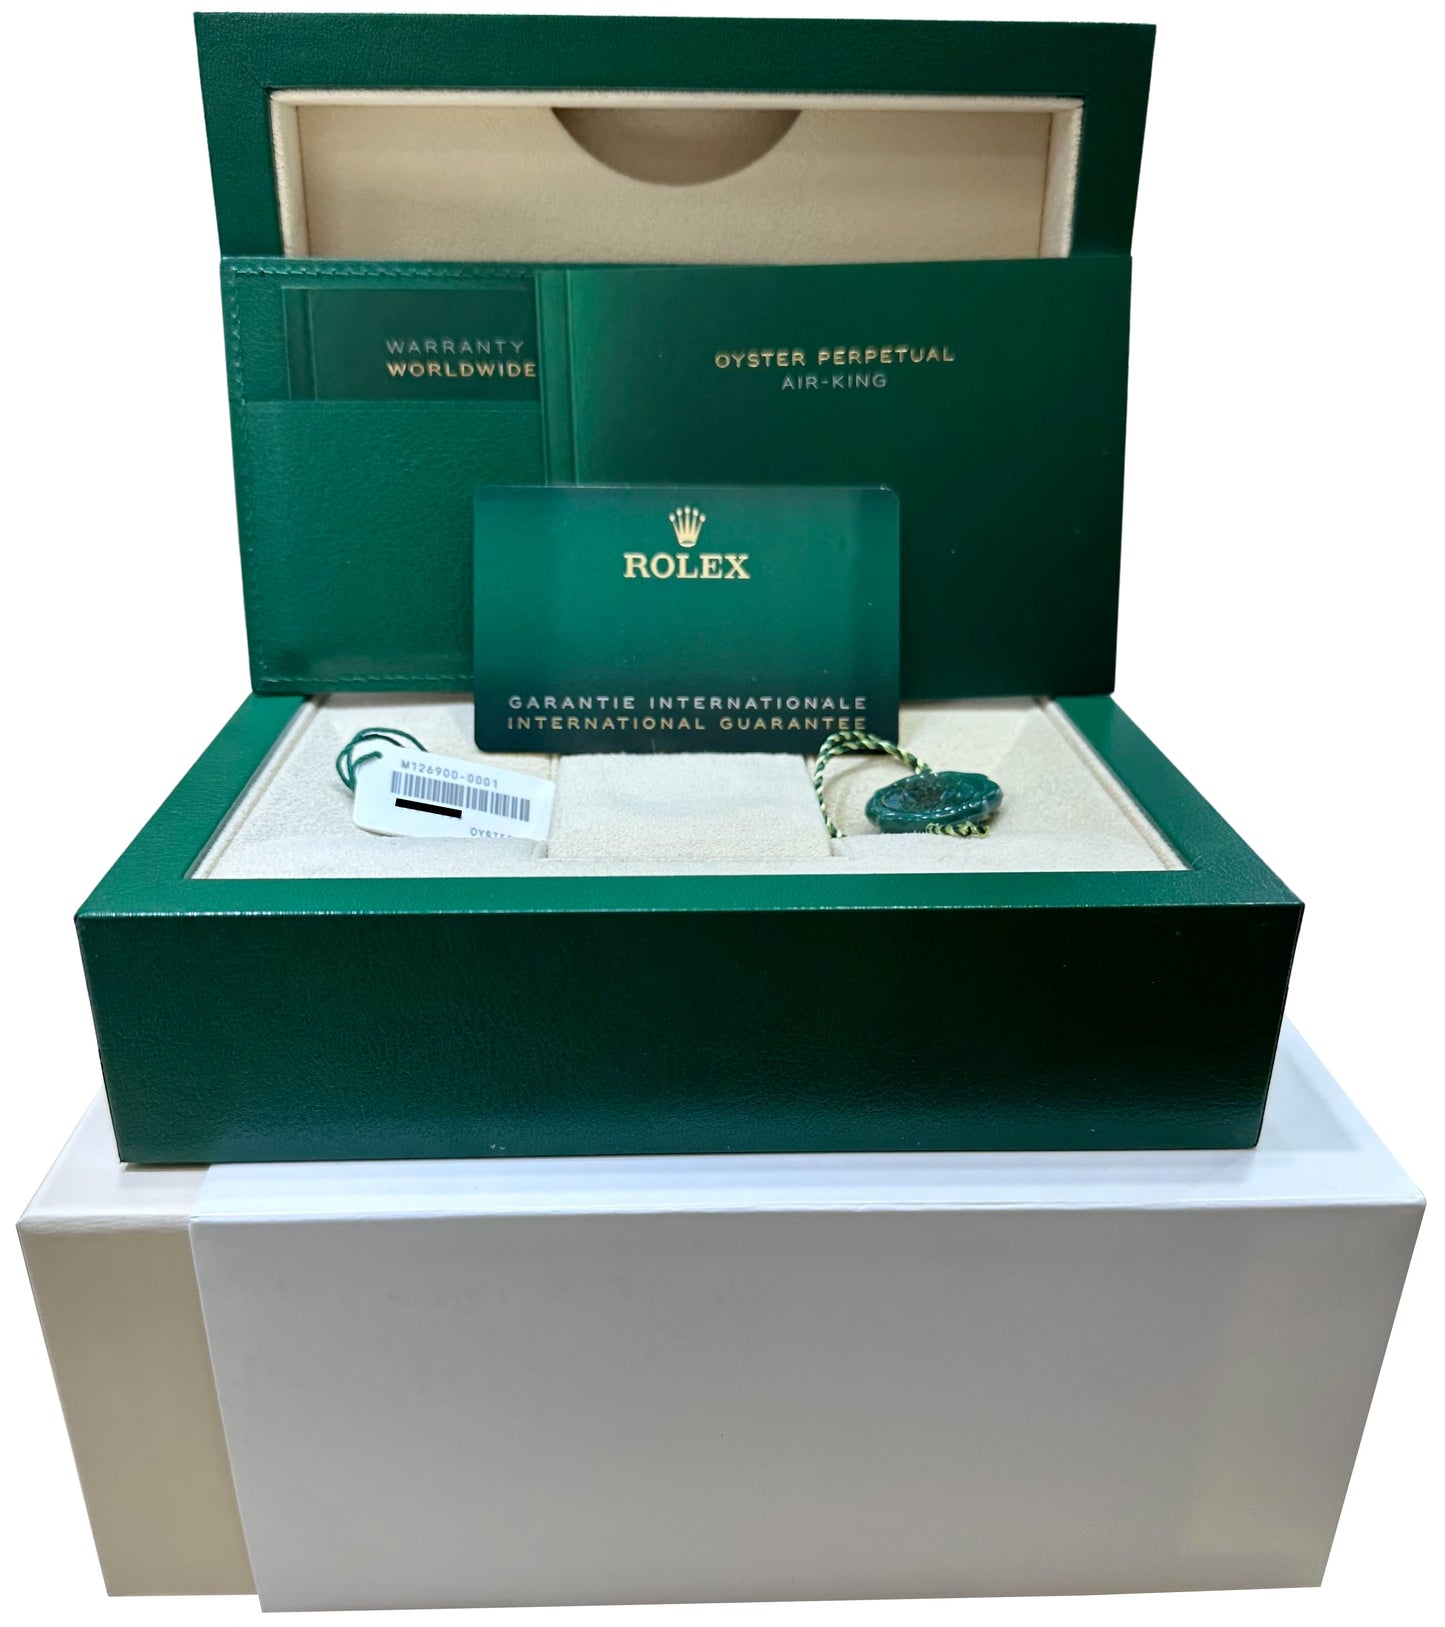 2022 Rolex Air-King 40mm Green Black Stainless Steel Arabic Watch 126900 B+P